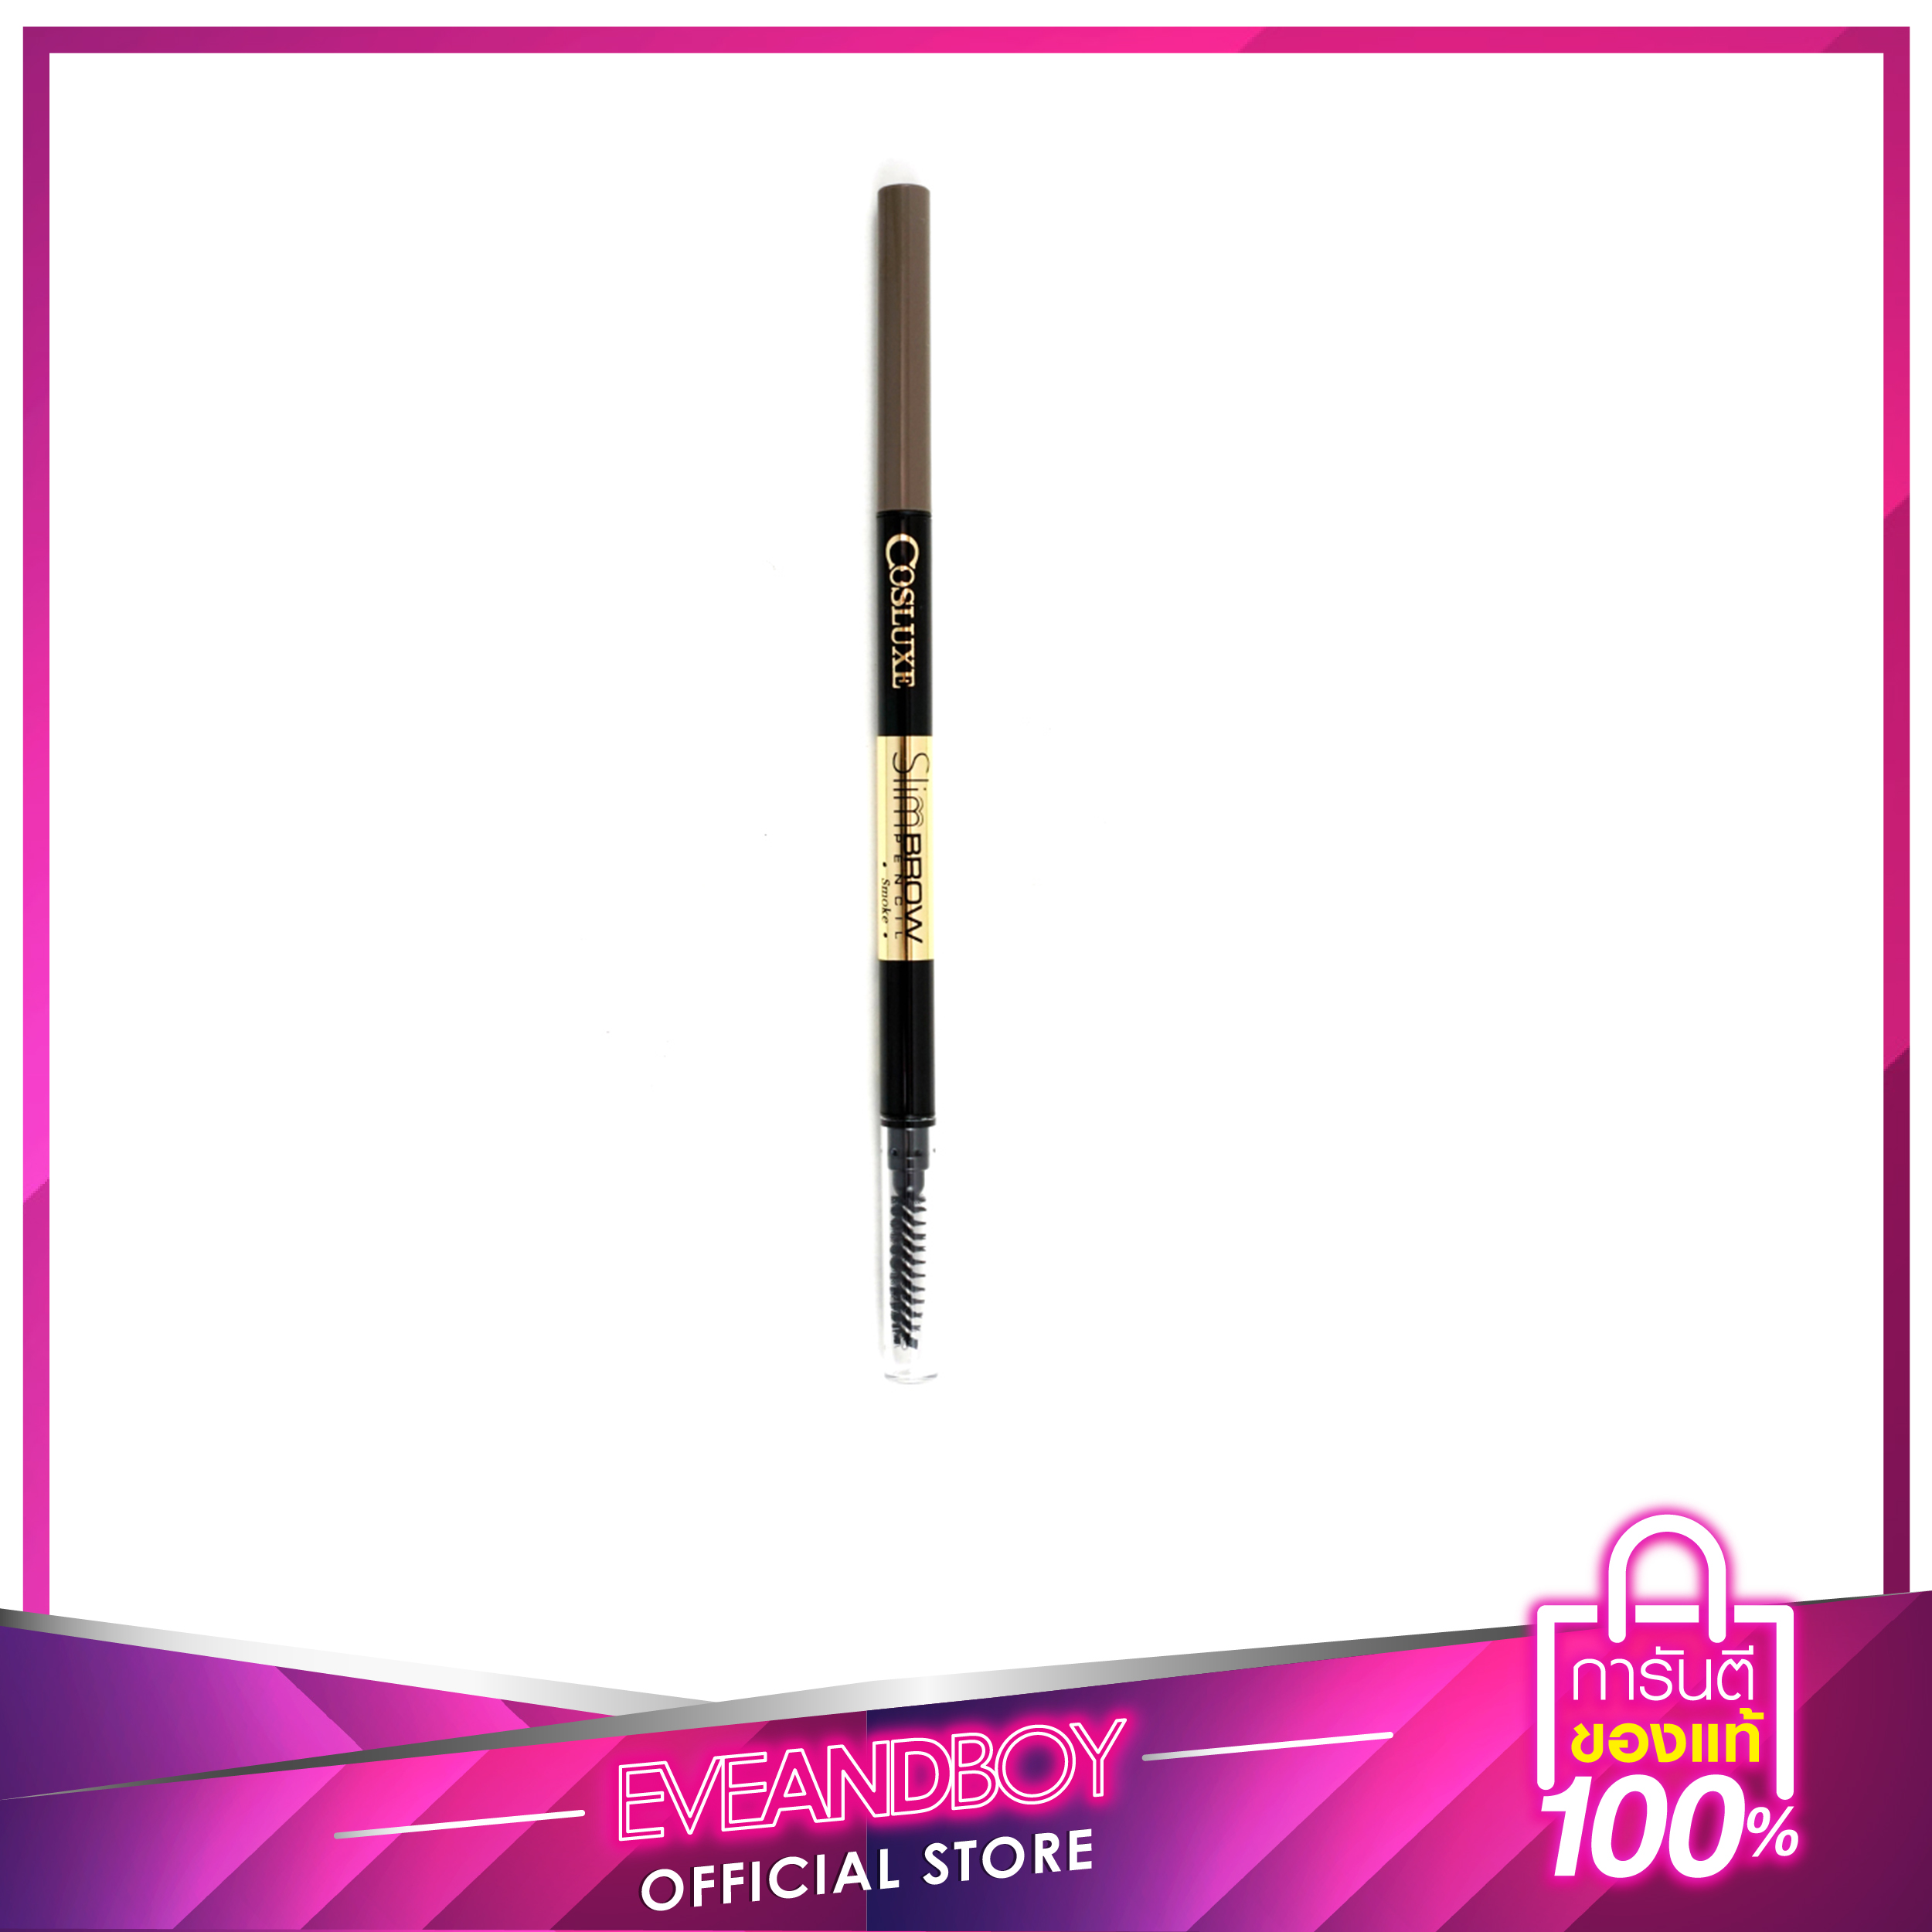 EVEANDBOY - ดินสอเขียนคิ้ว COSLUXE Slimbrow Pencil